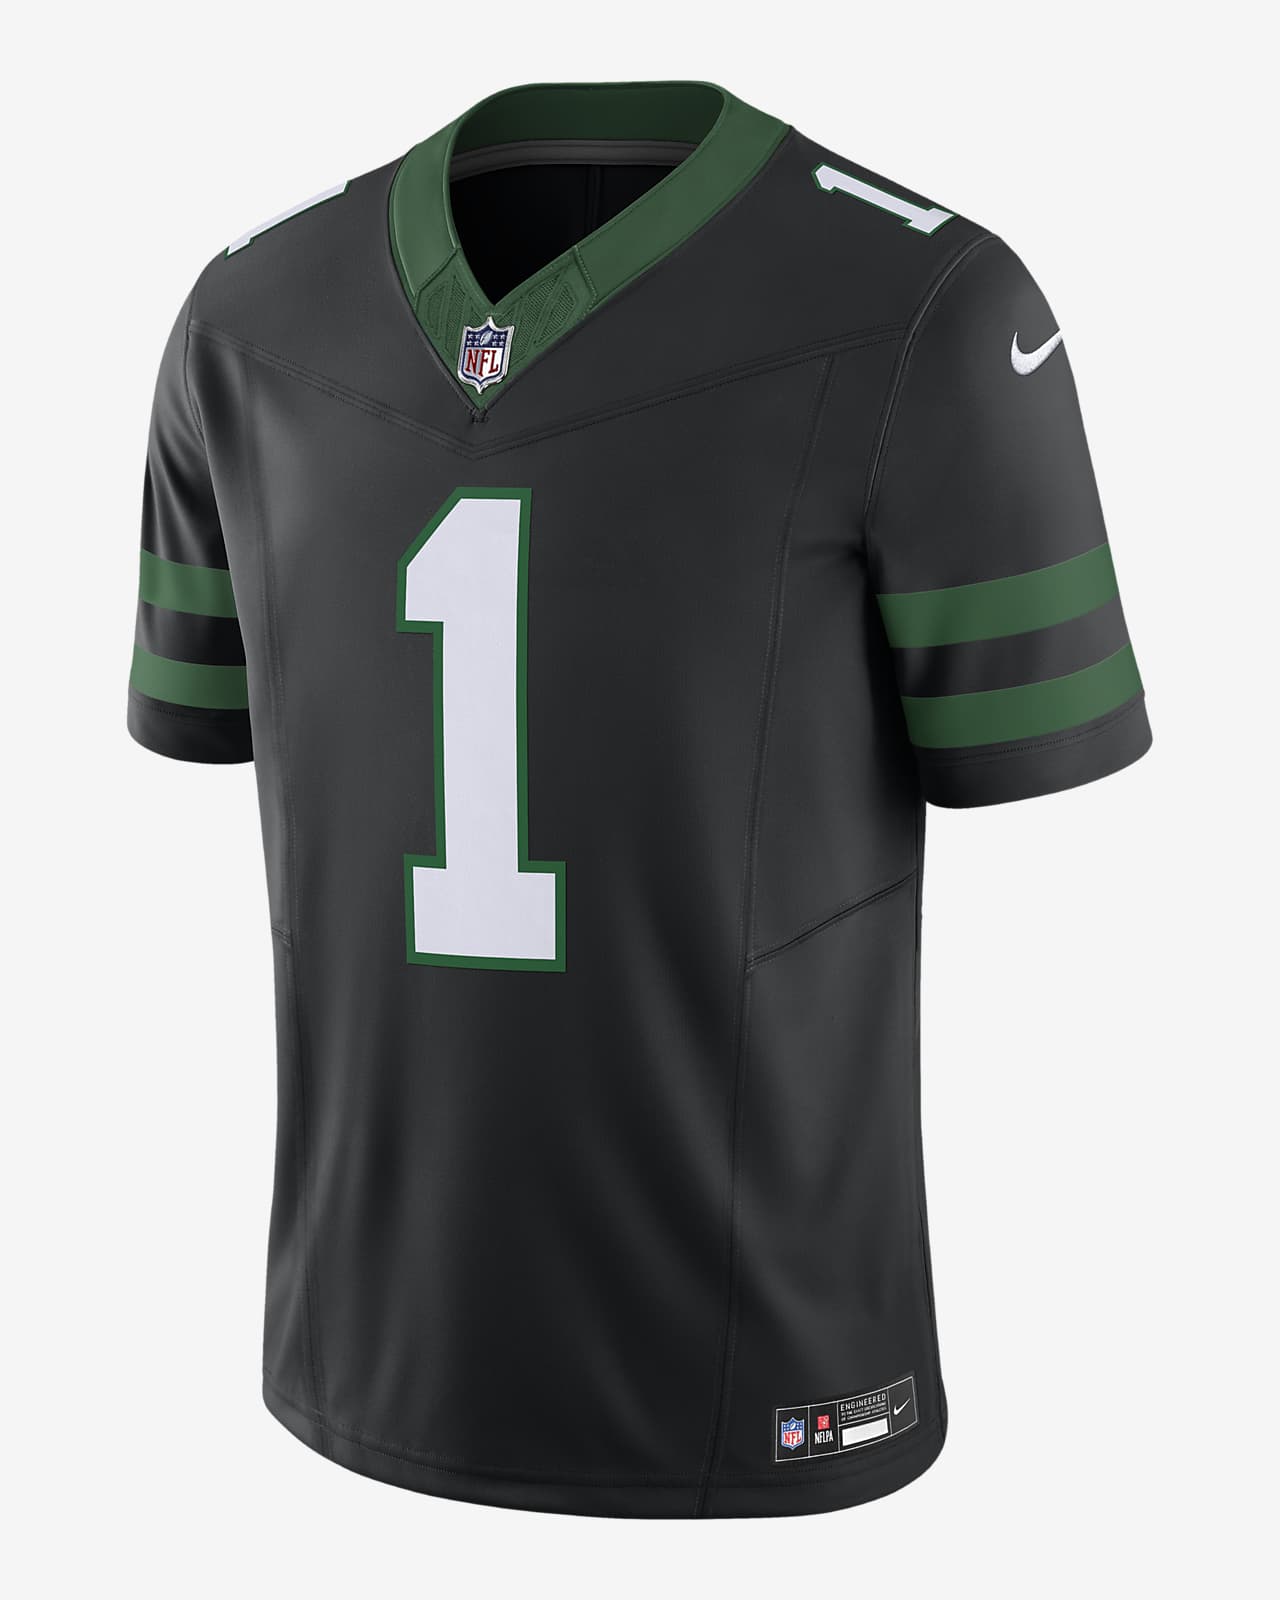 Sauce Gardner New York Jets Men's Nike Dri-FIT NFL Limited Football Jersey